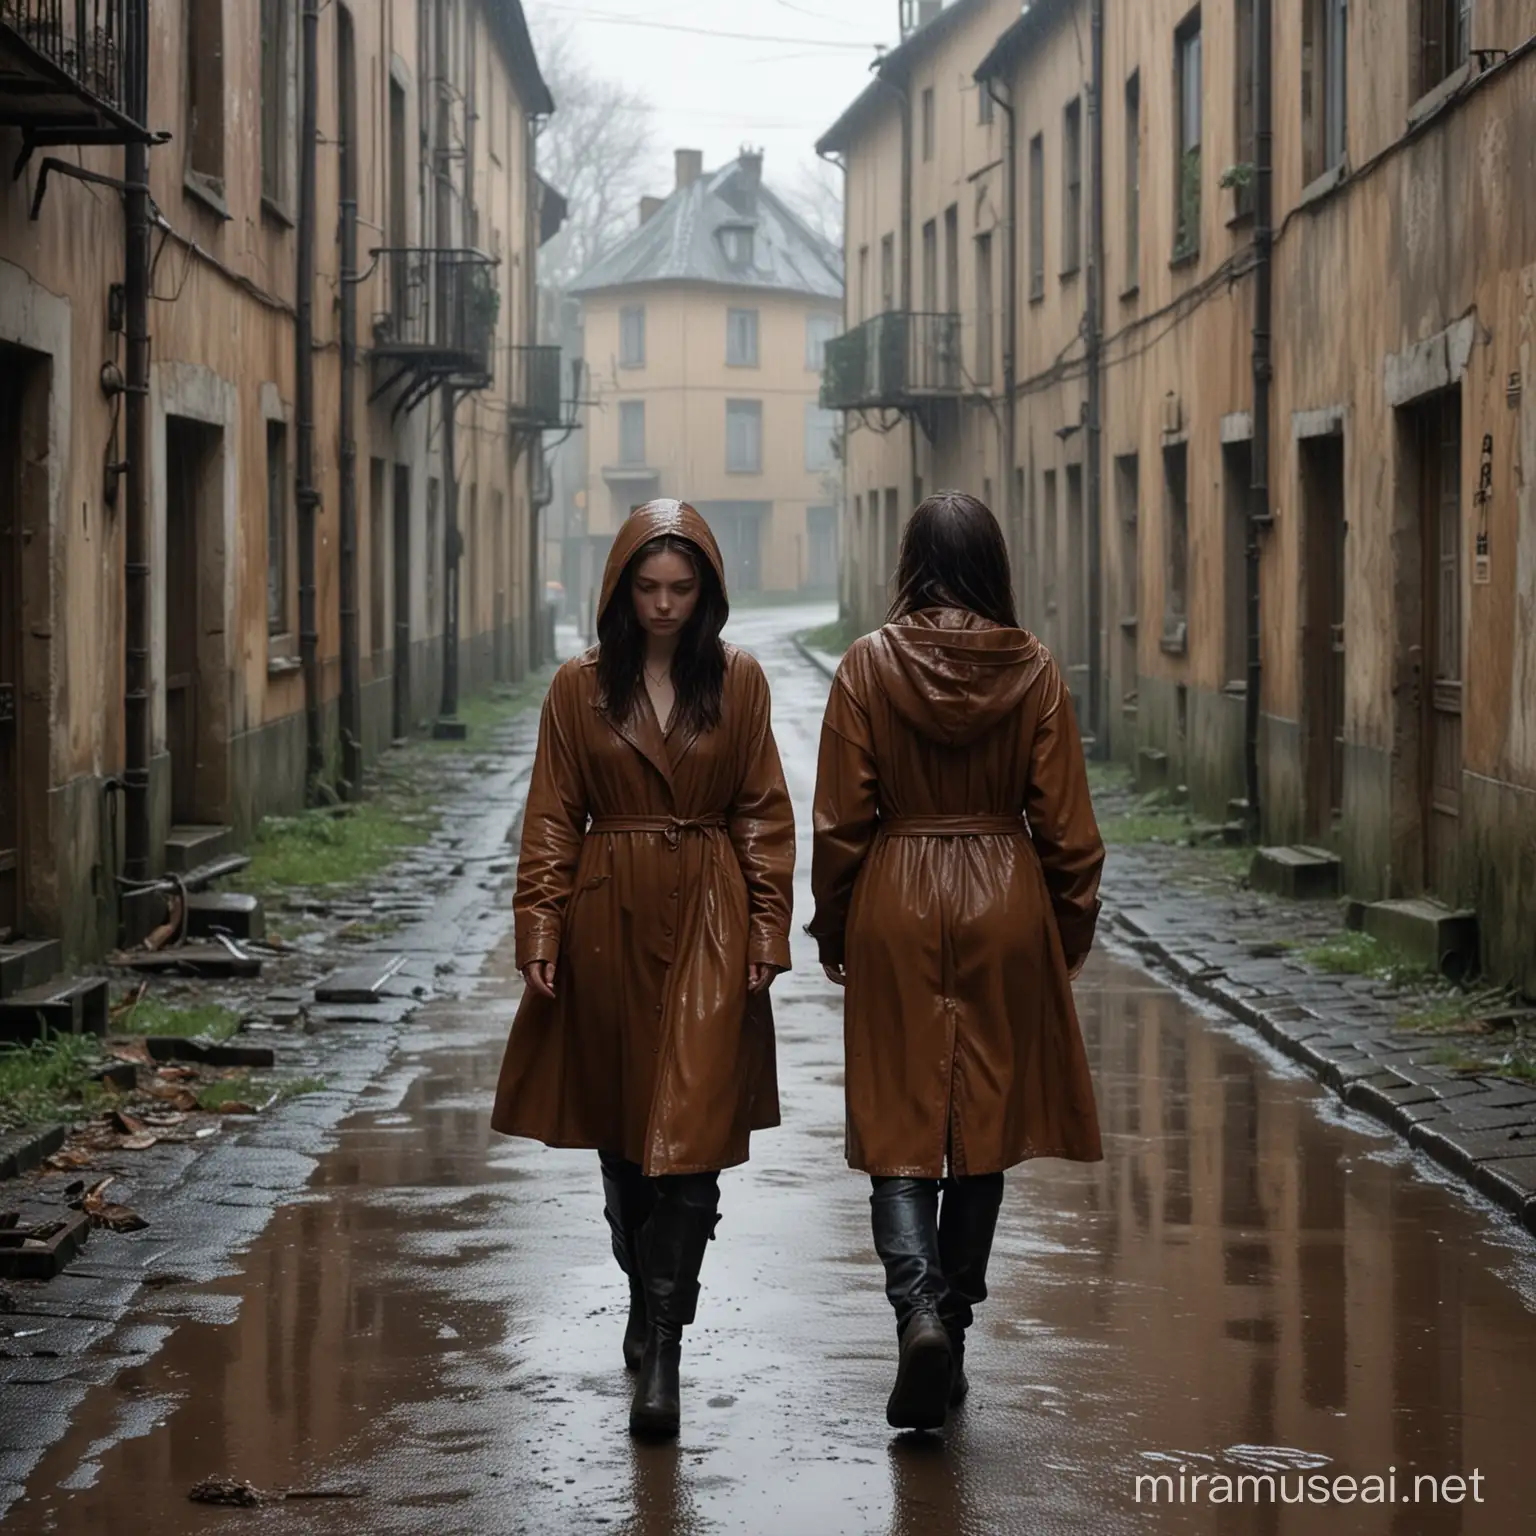 Mysterious Woman Walking in Rainy Tarkovsky Scene